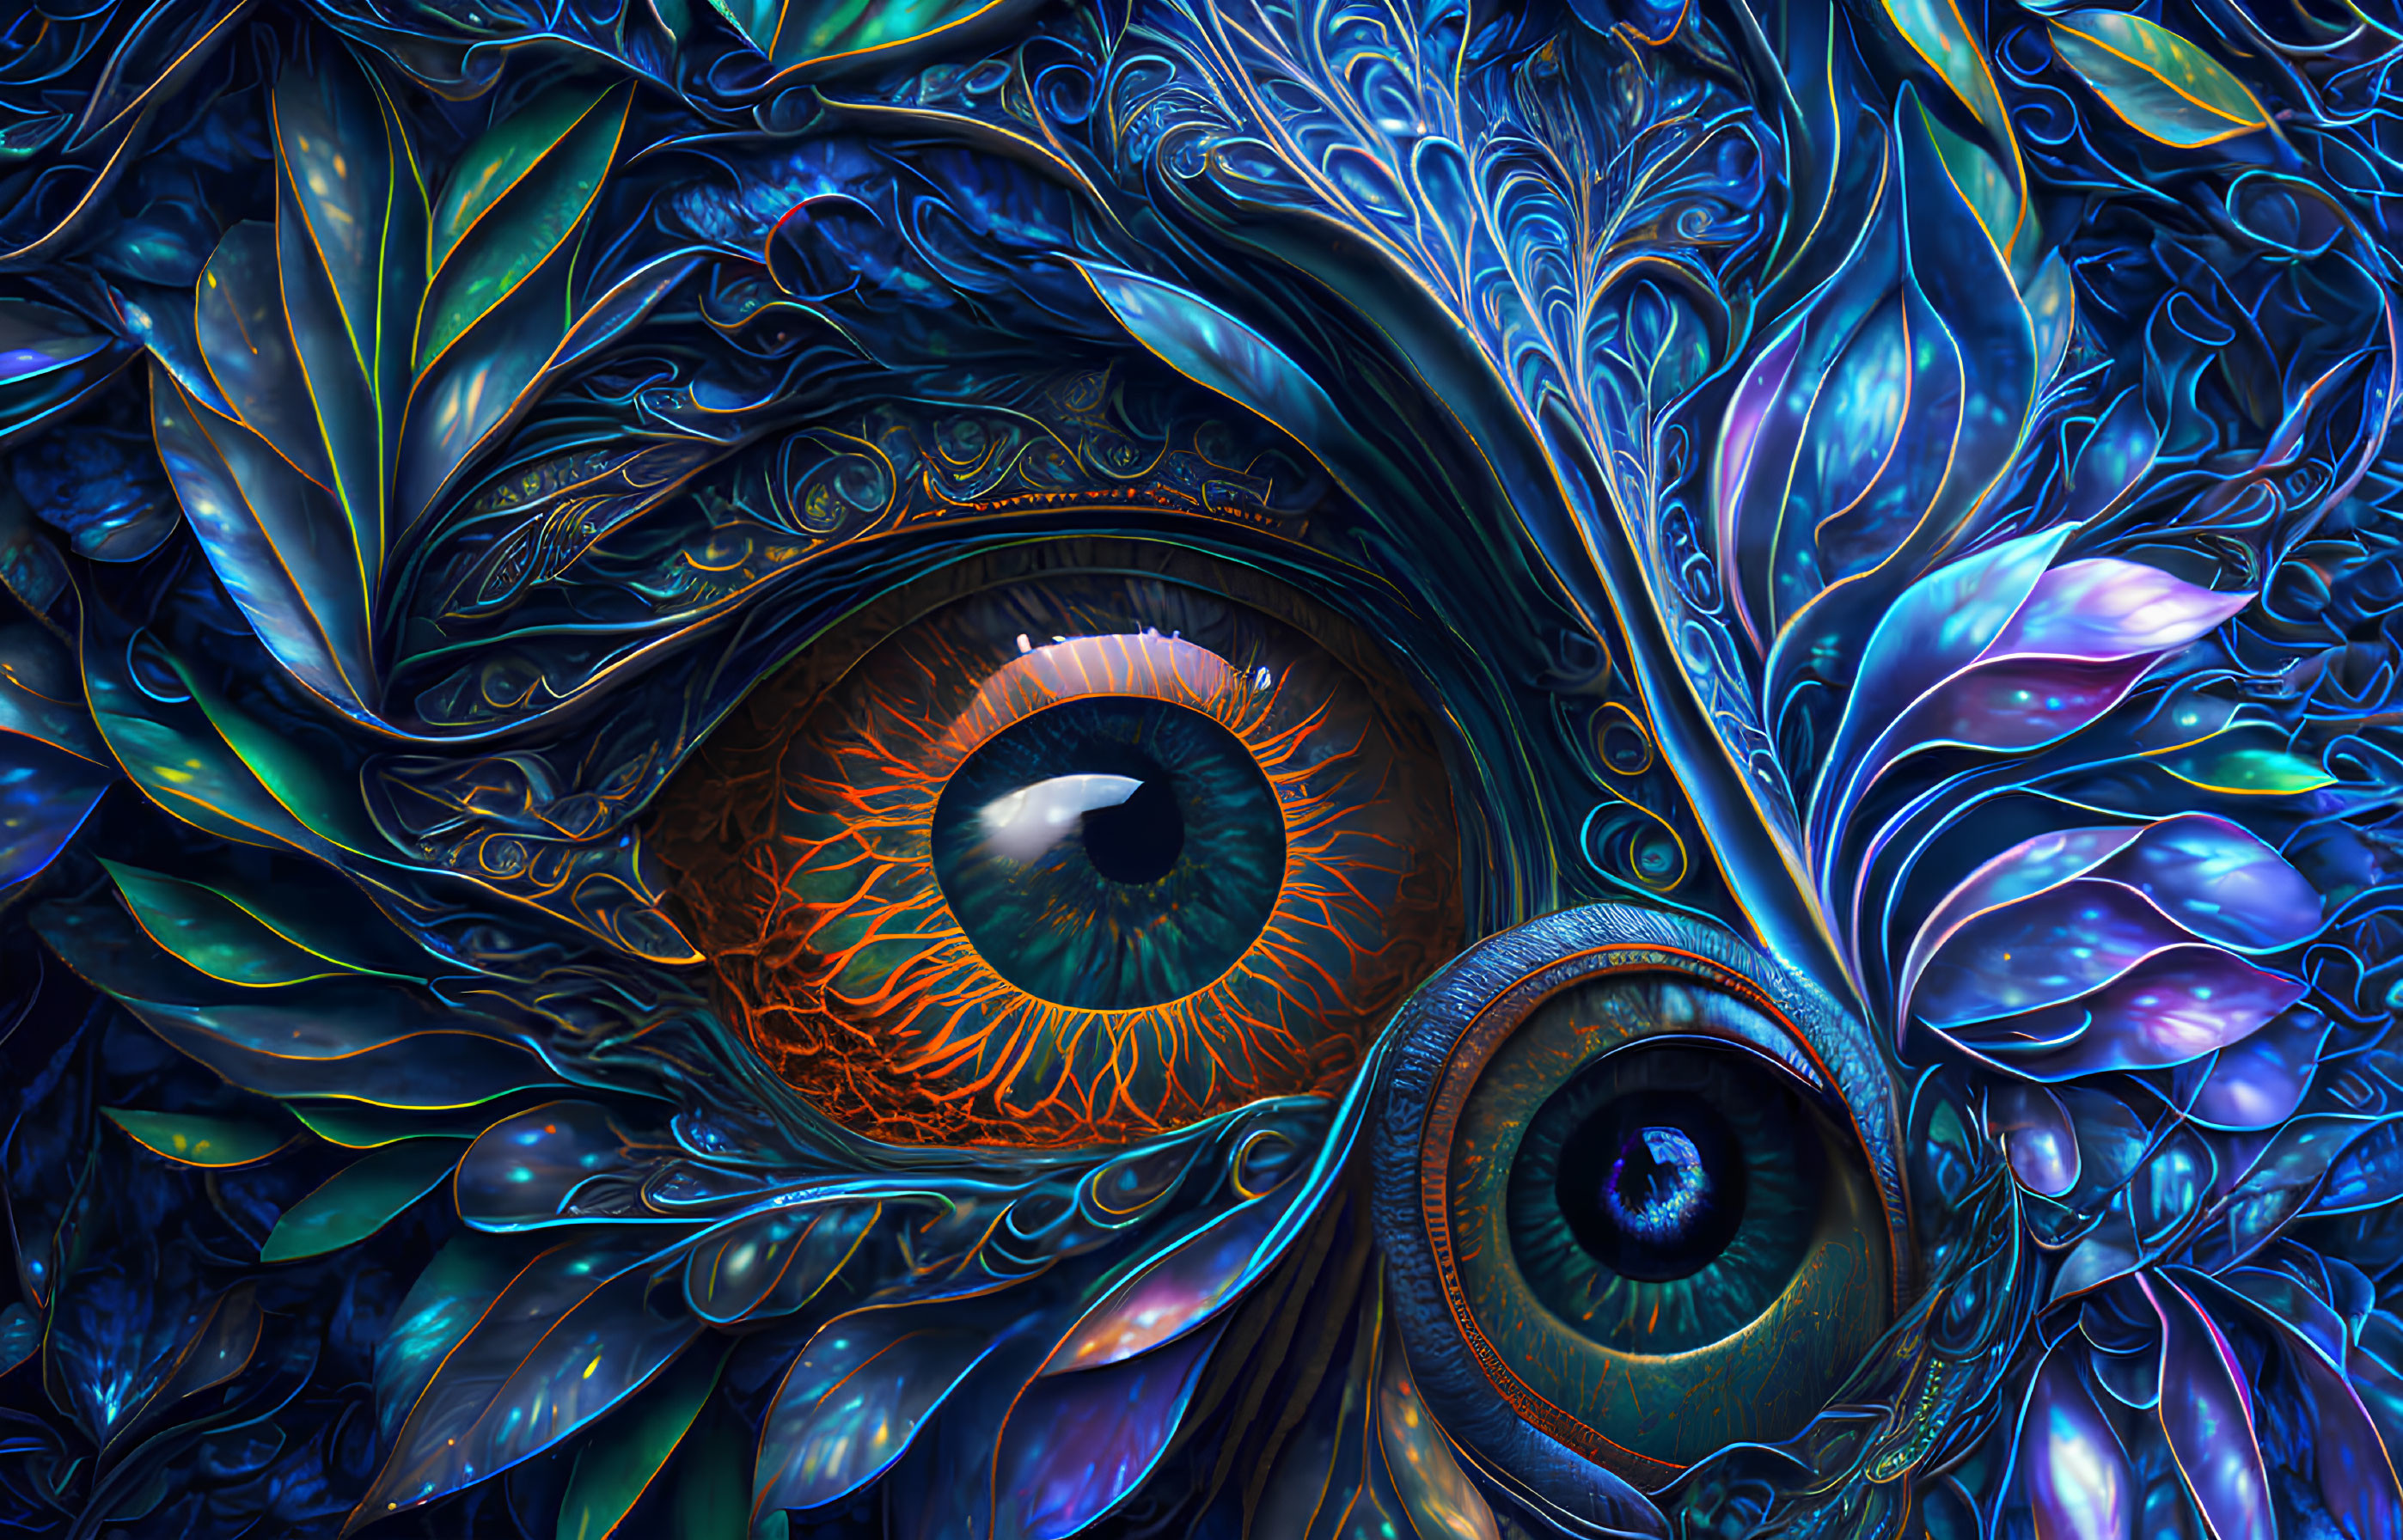 Colorful digital artwork of human eye with leaf-like patterns in blue and orange.